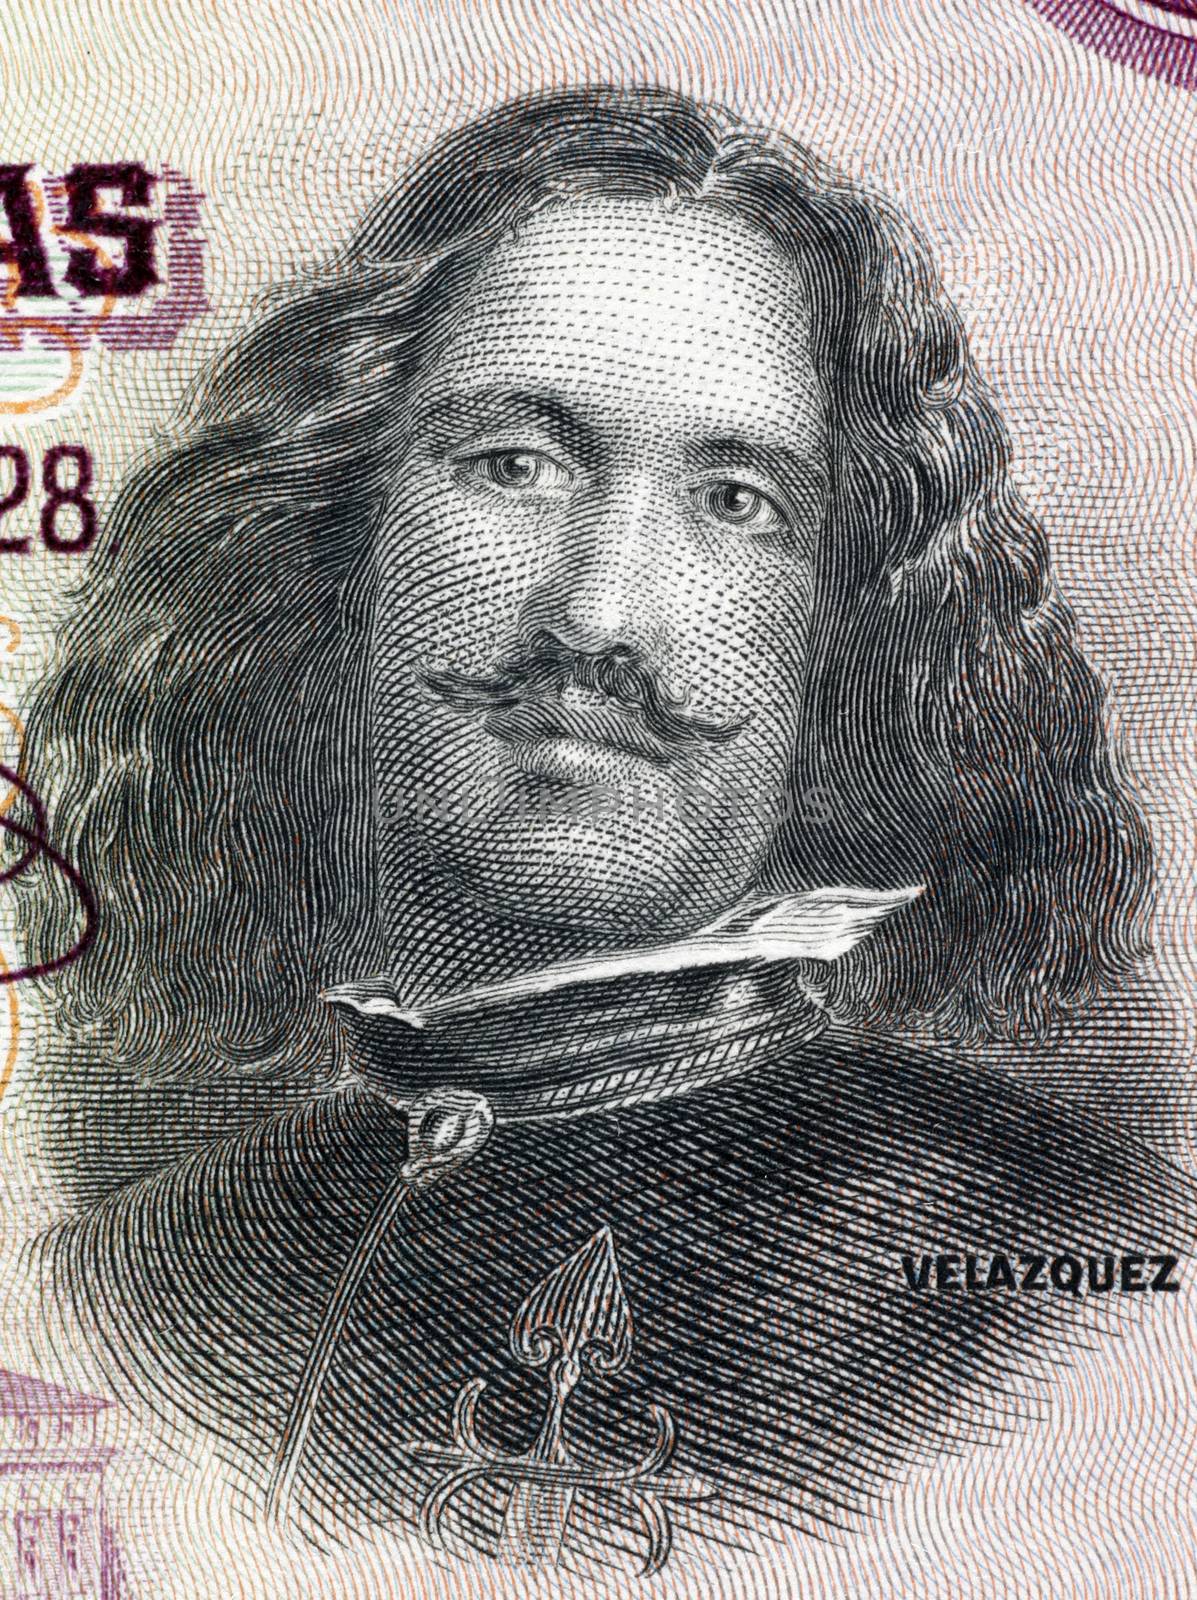 Diego Velazquez by Georgios